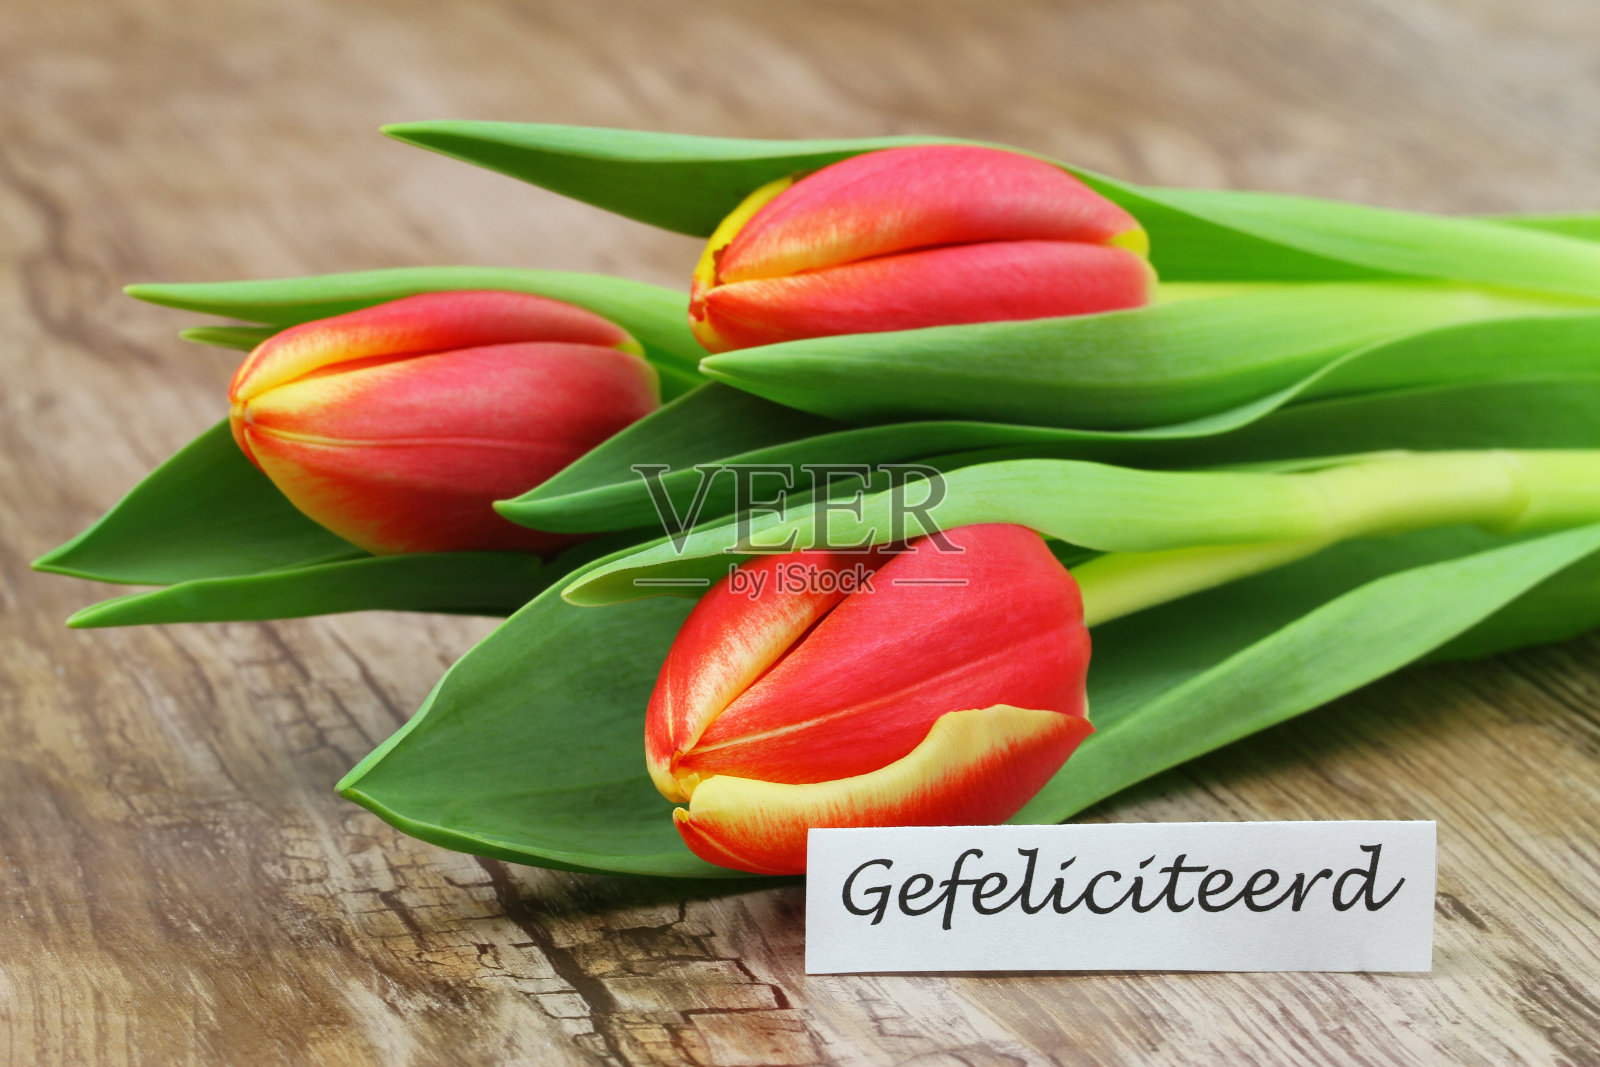 Gefeliciteerd(荷兰语，祝贺你)卡片，上面有一朵红色和黄色的郁金香照片摄影图片